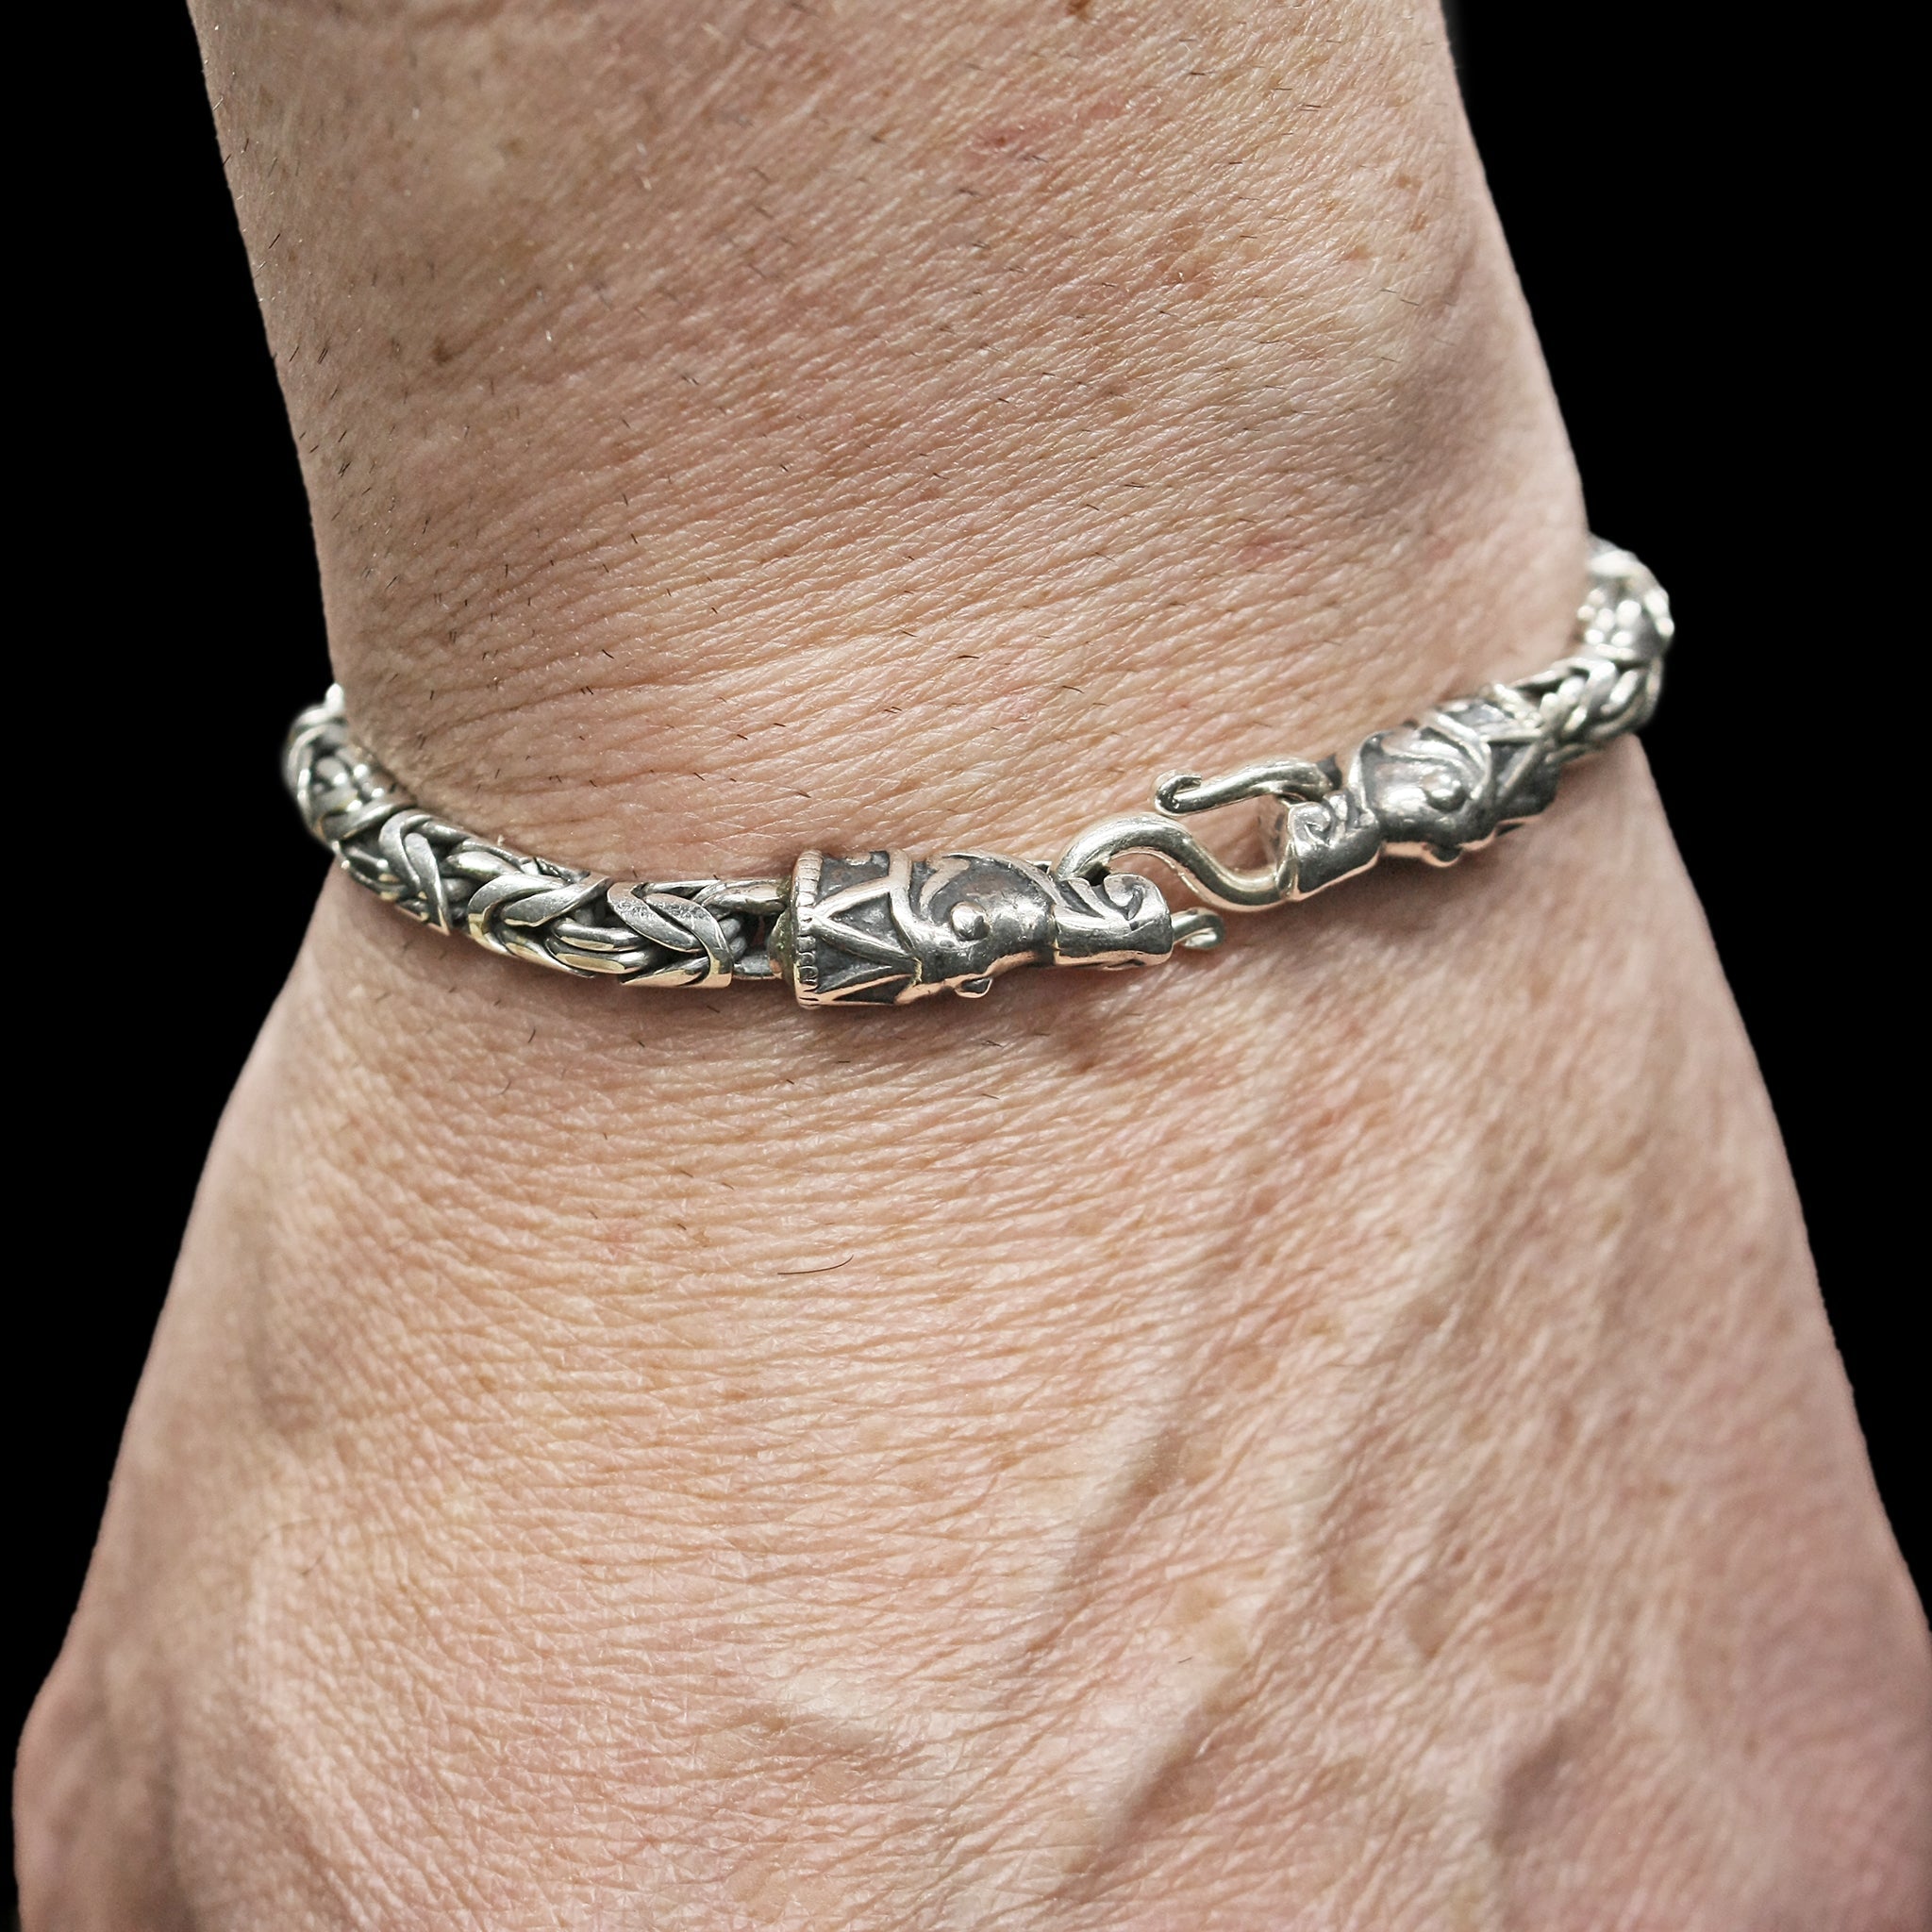 5mm Silver King Bracelet With Gotlandic Dragon Heads on Wrist